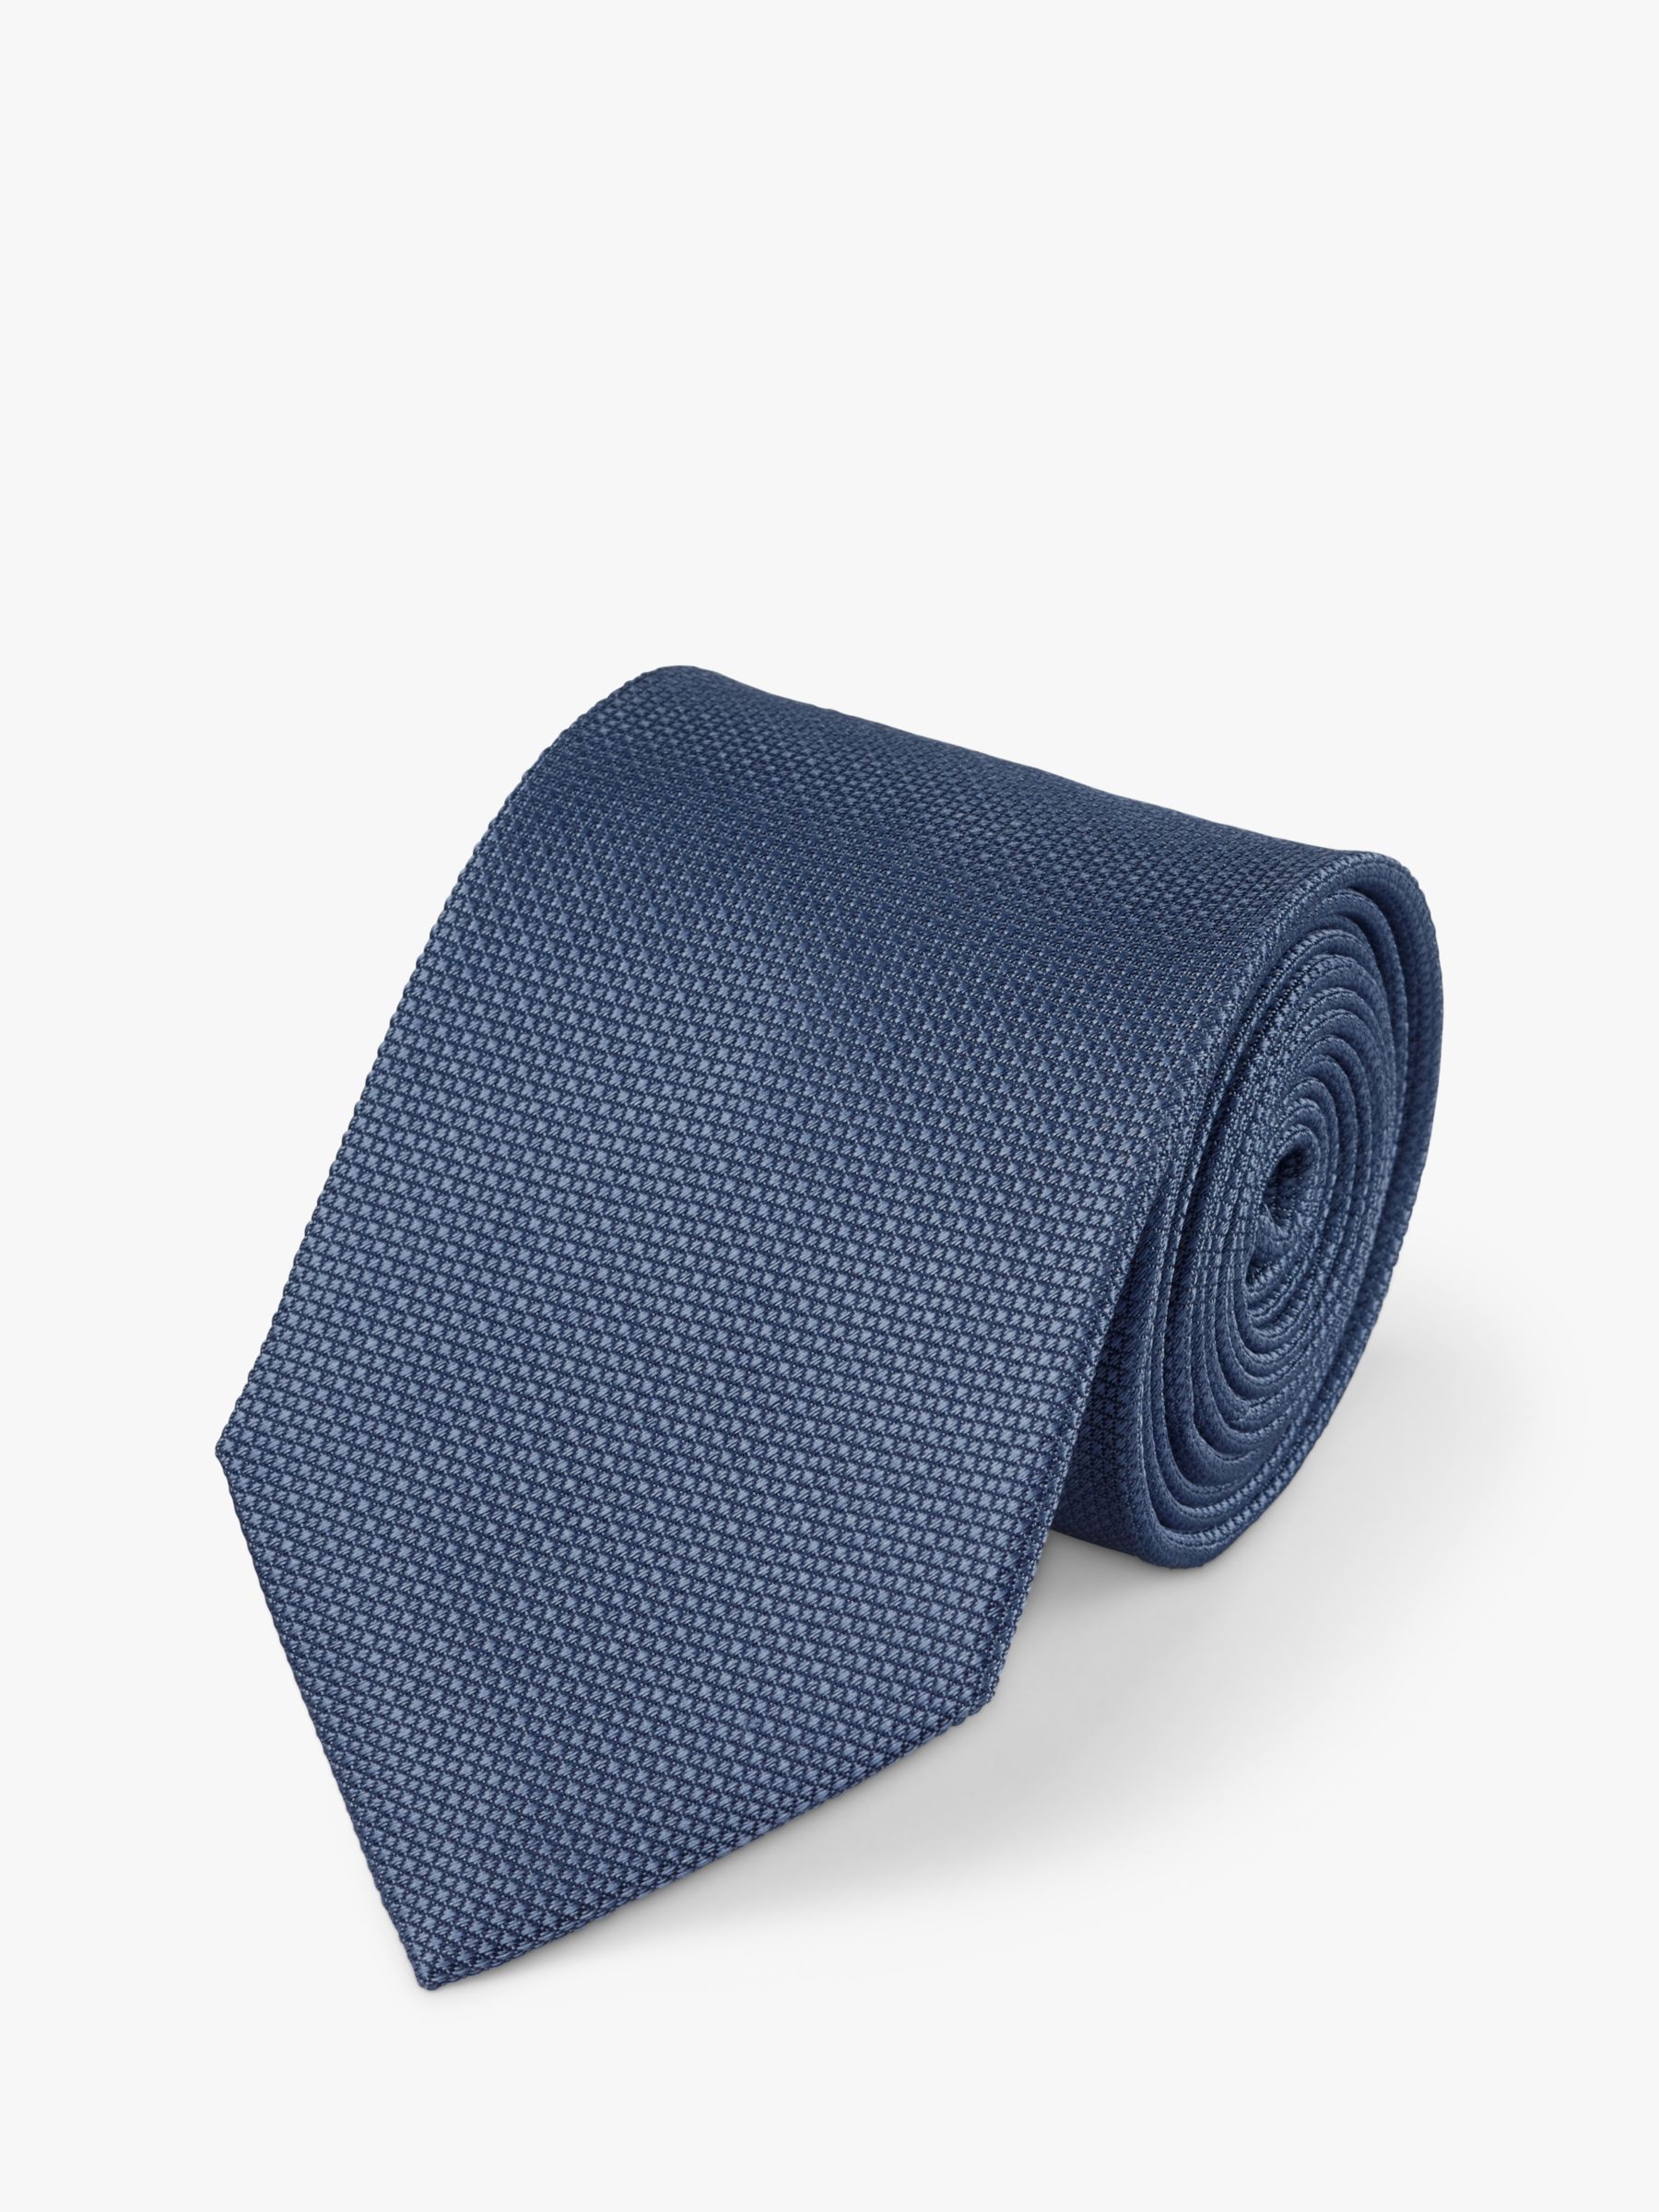 Charles Tyrwhitt Stain Resistant Silk Tie, Steel Blue, One Size